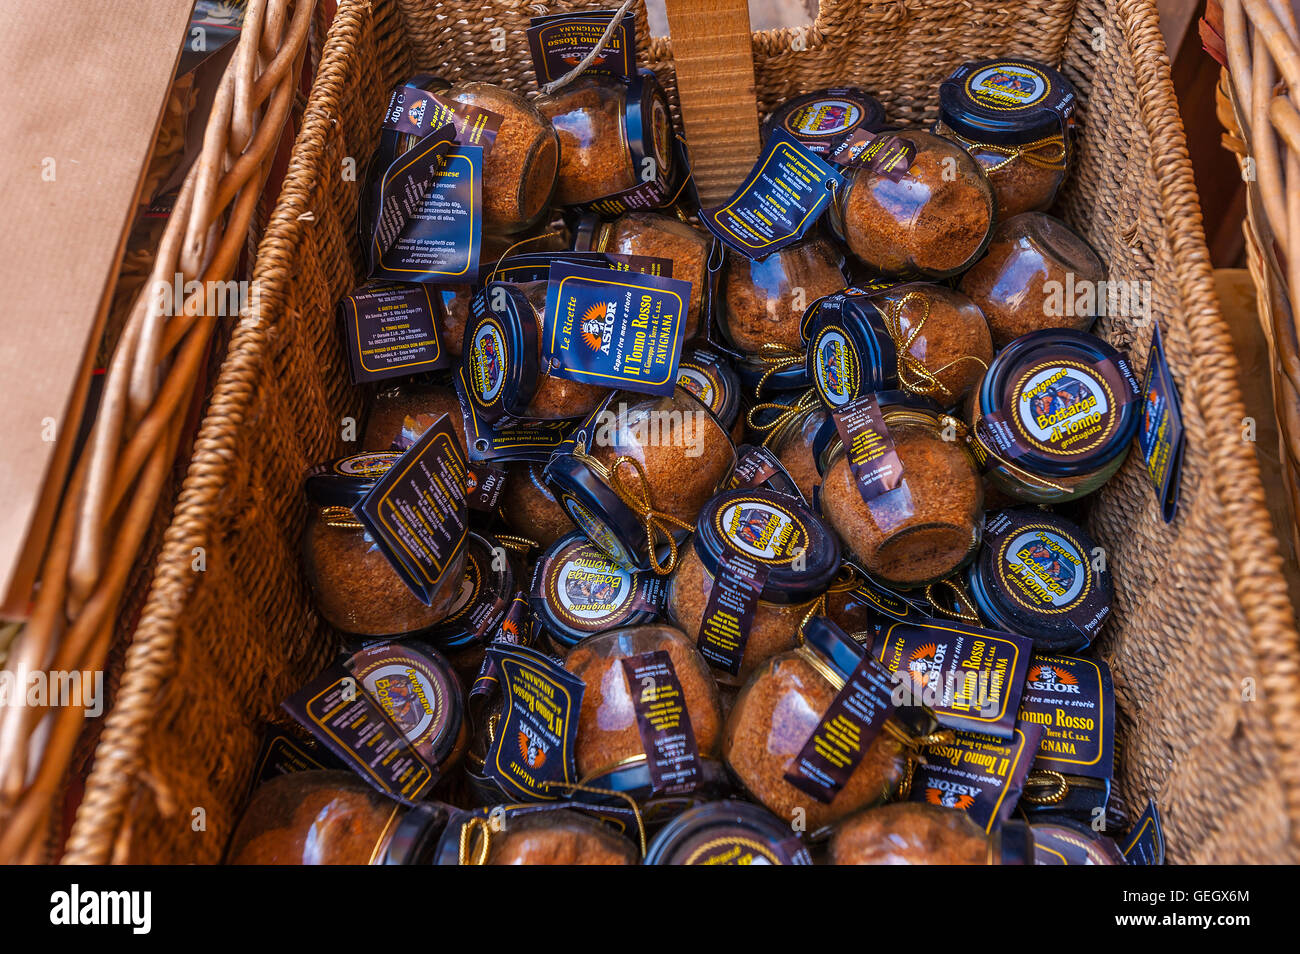 Italy Sicily Egadi Islands Favignana - Shop of tunna products in Piazza Madrice - botargo of bluefin tuna Stock Photo